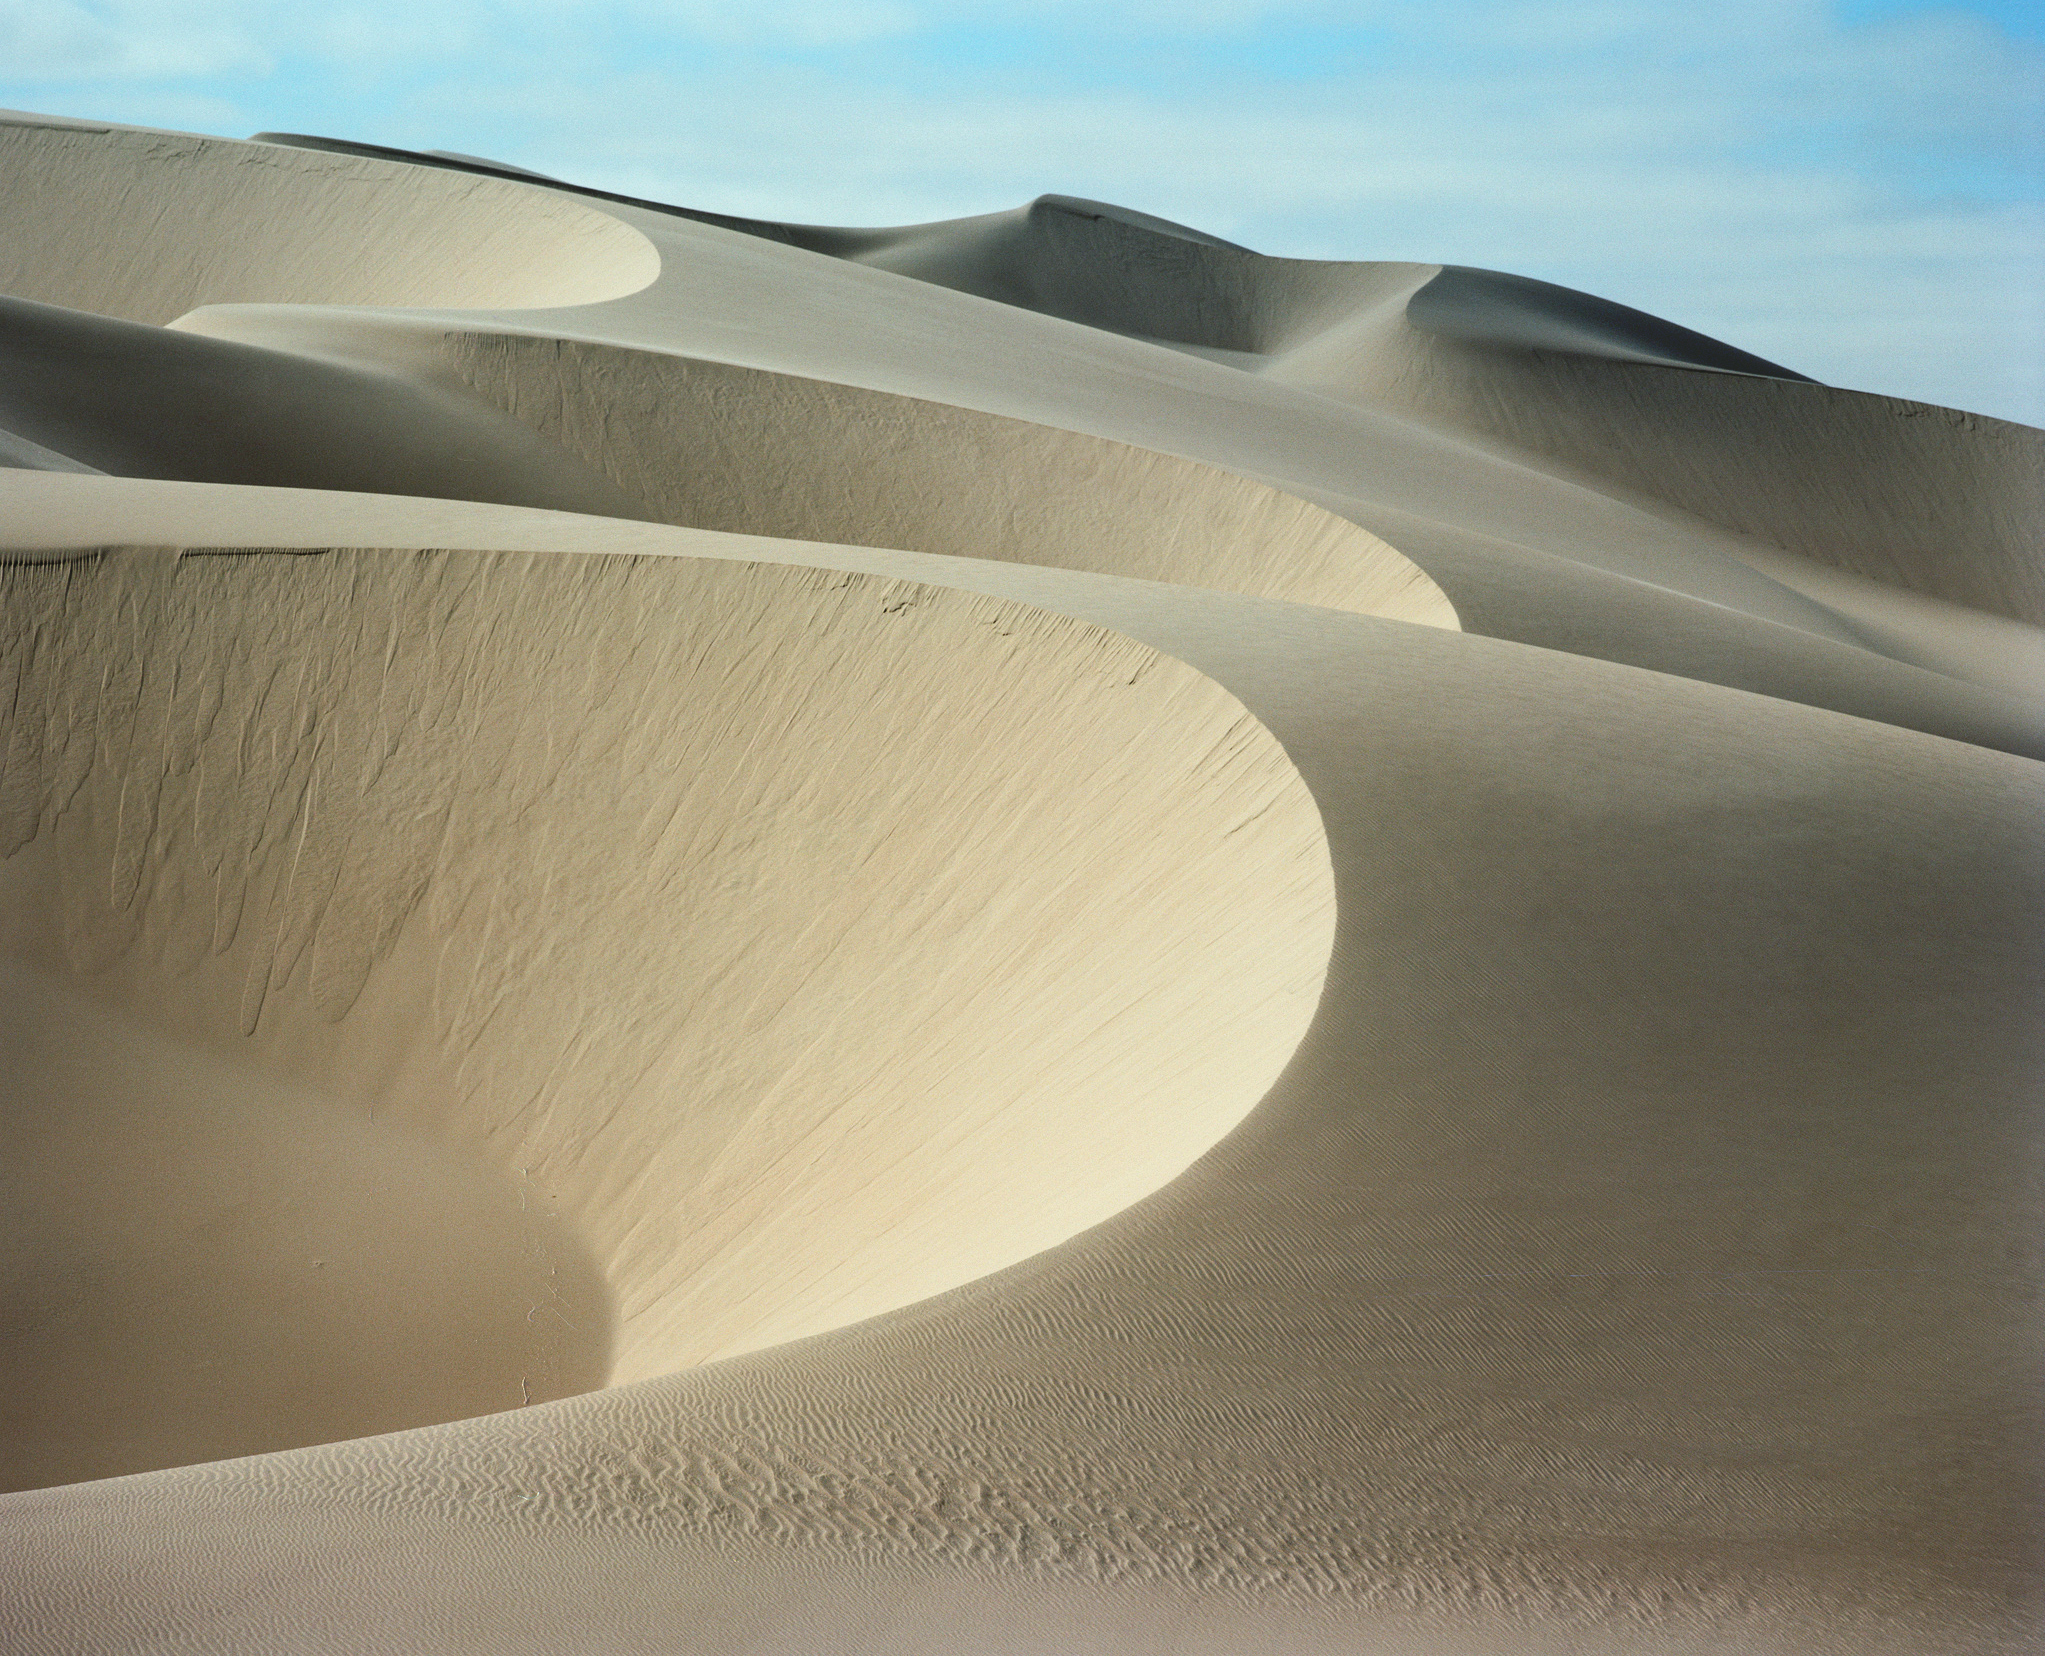 Shipwreck Lodge - Landscapes - Iconic desert dunes.jpg